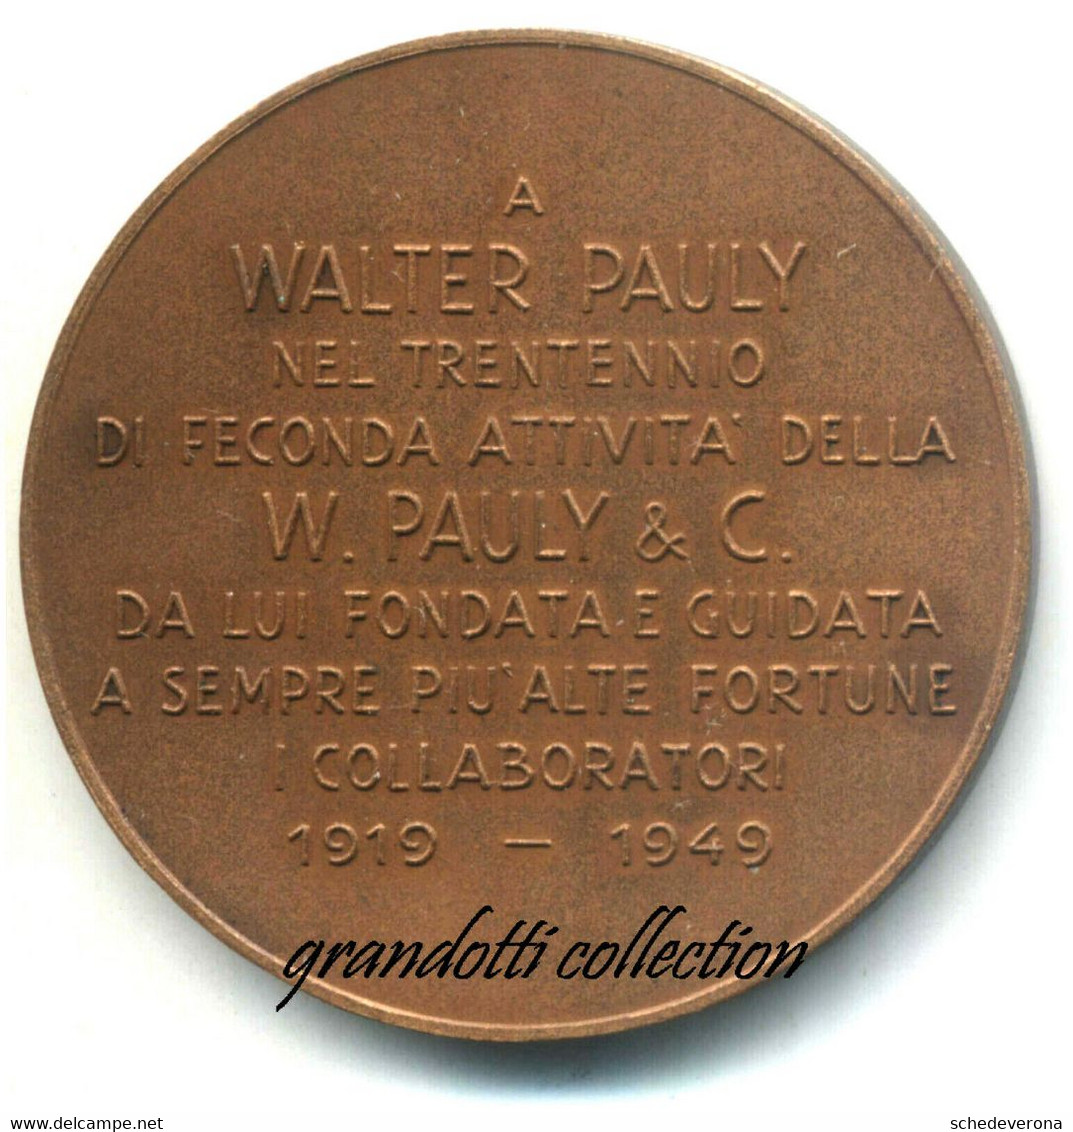 A WALTER PAULY I COLLABORATORI 30° MEDAGLIA 1949 EMILIO MONTI - Professionnels/De Société